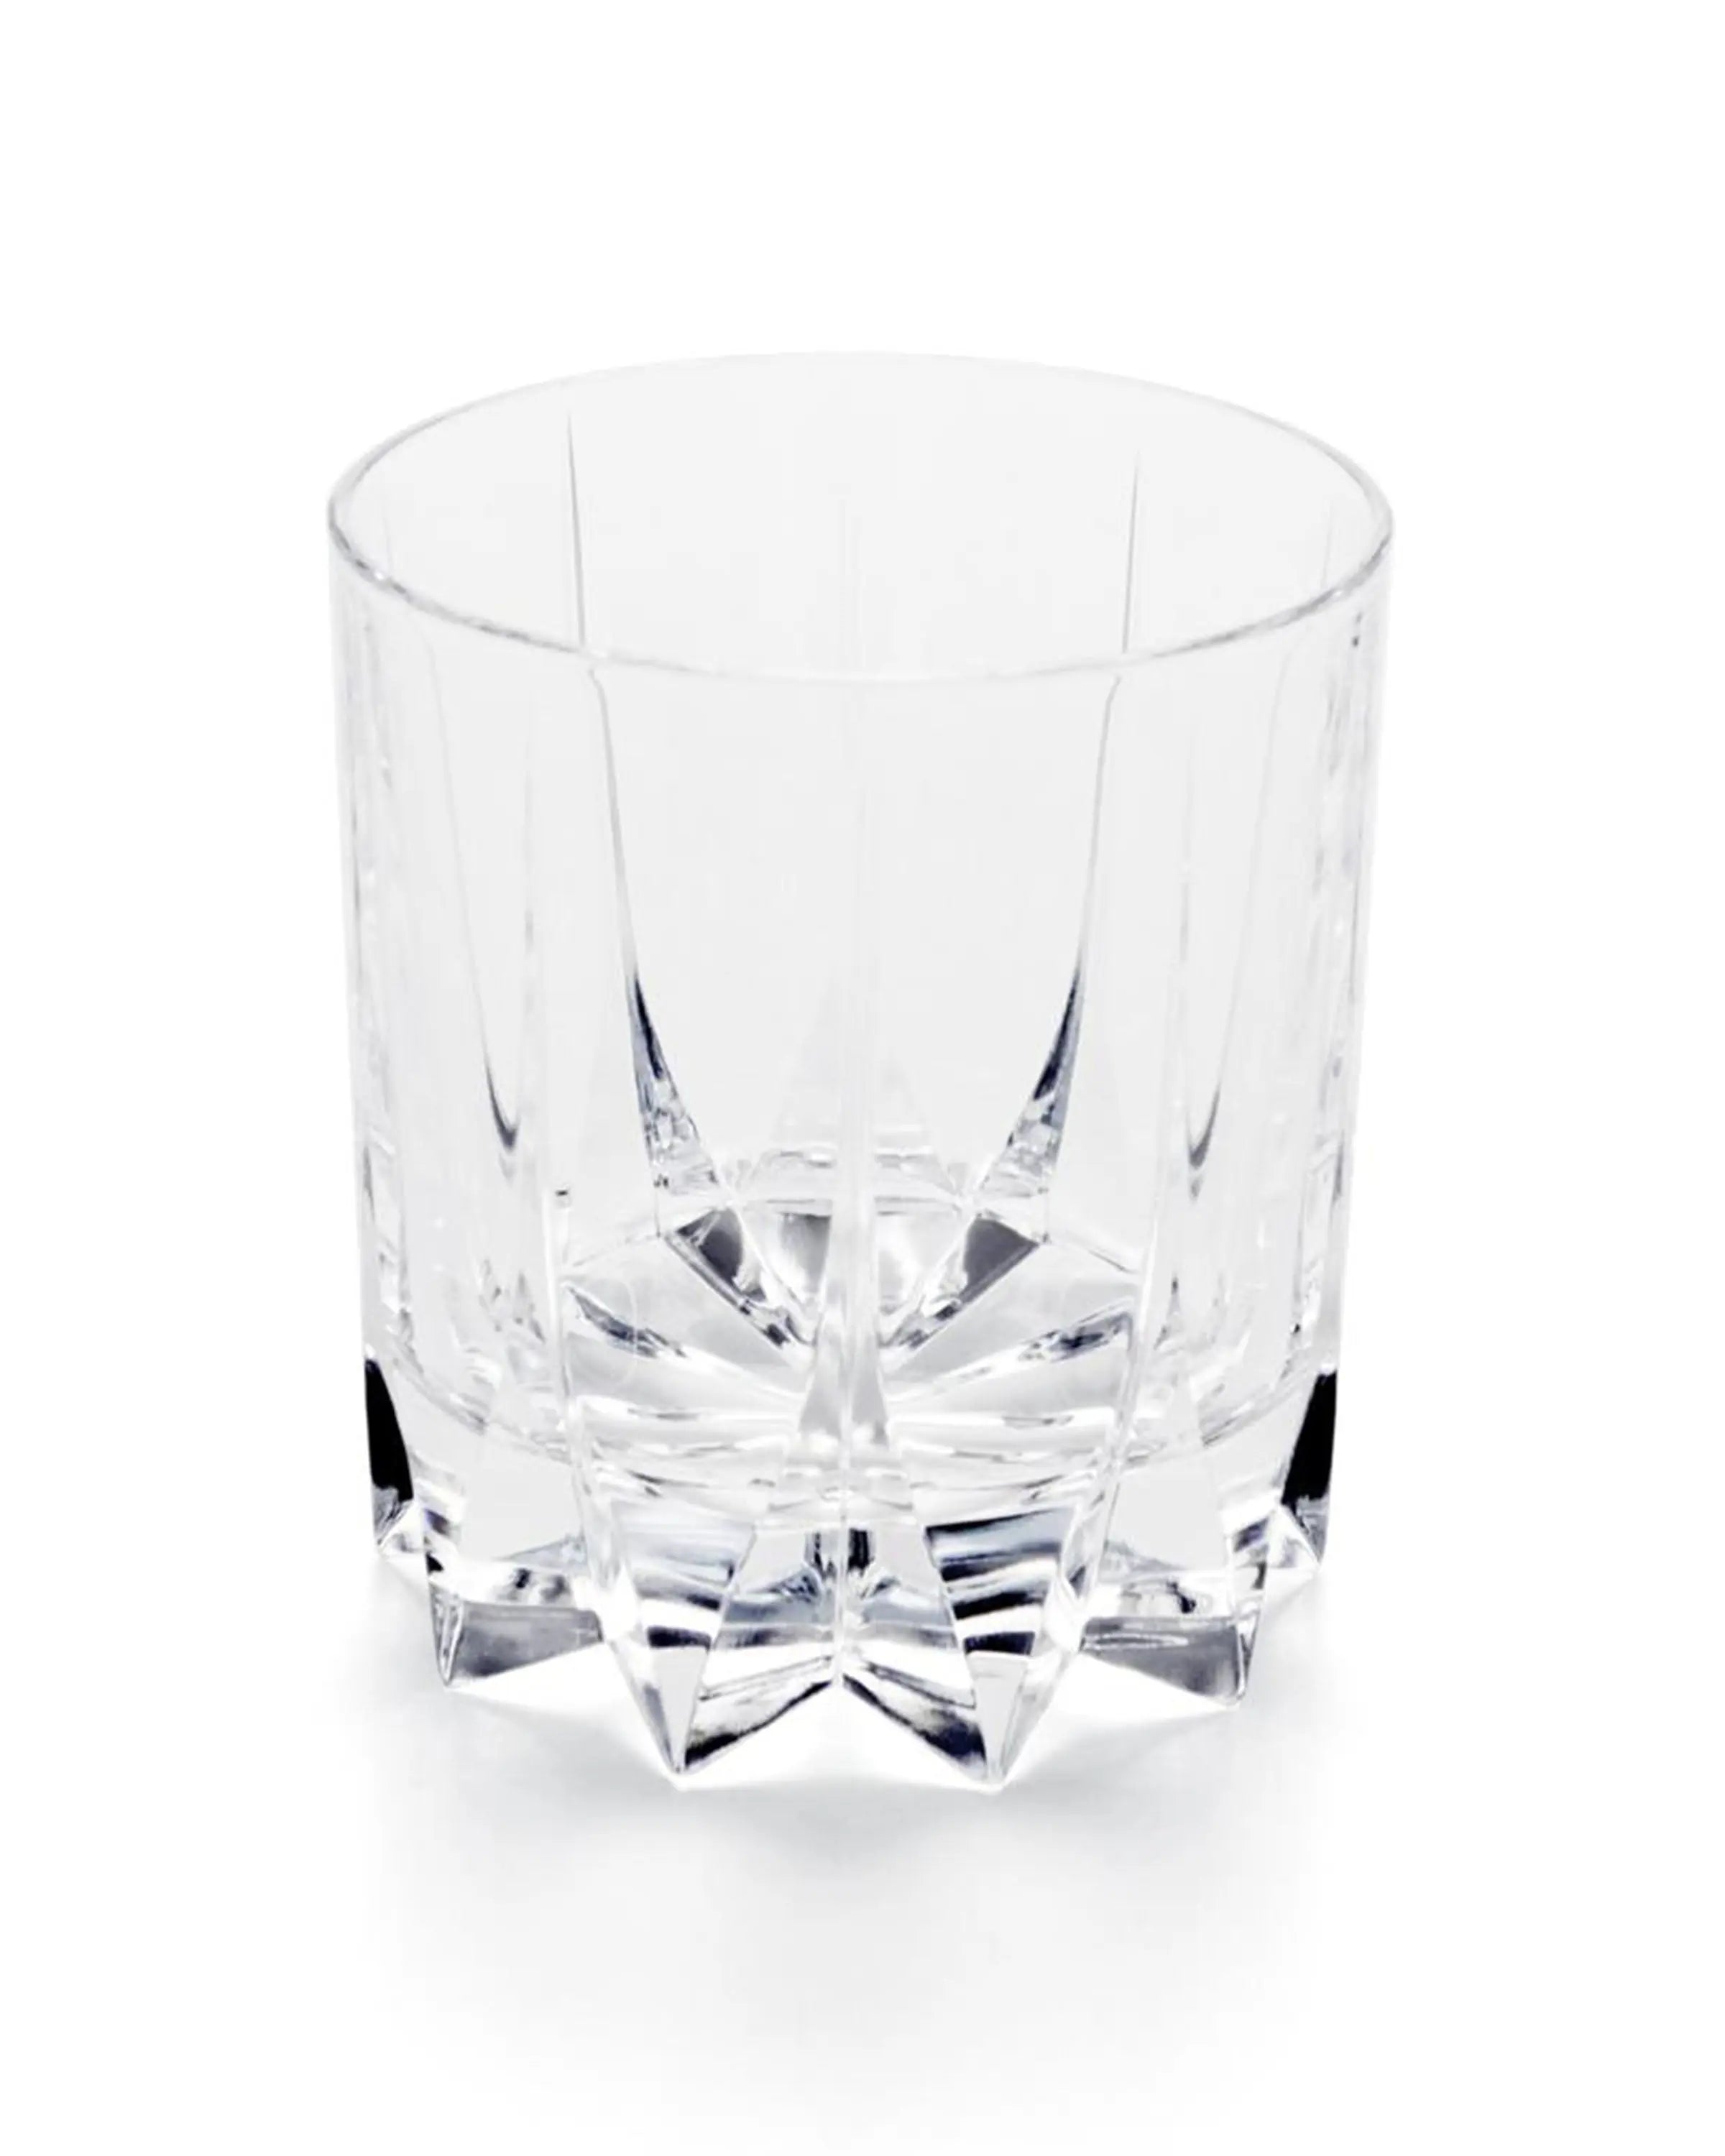 Exquisite Handcrafted Crystal Glassware